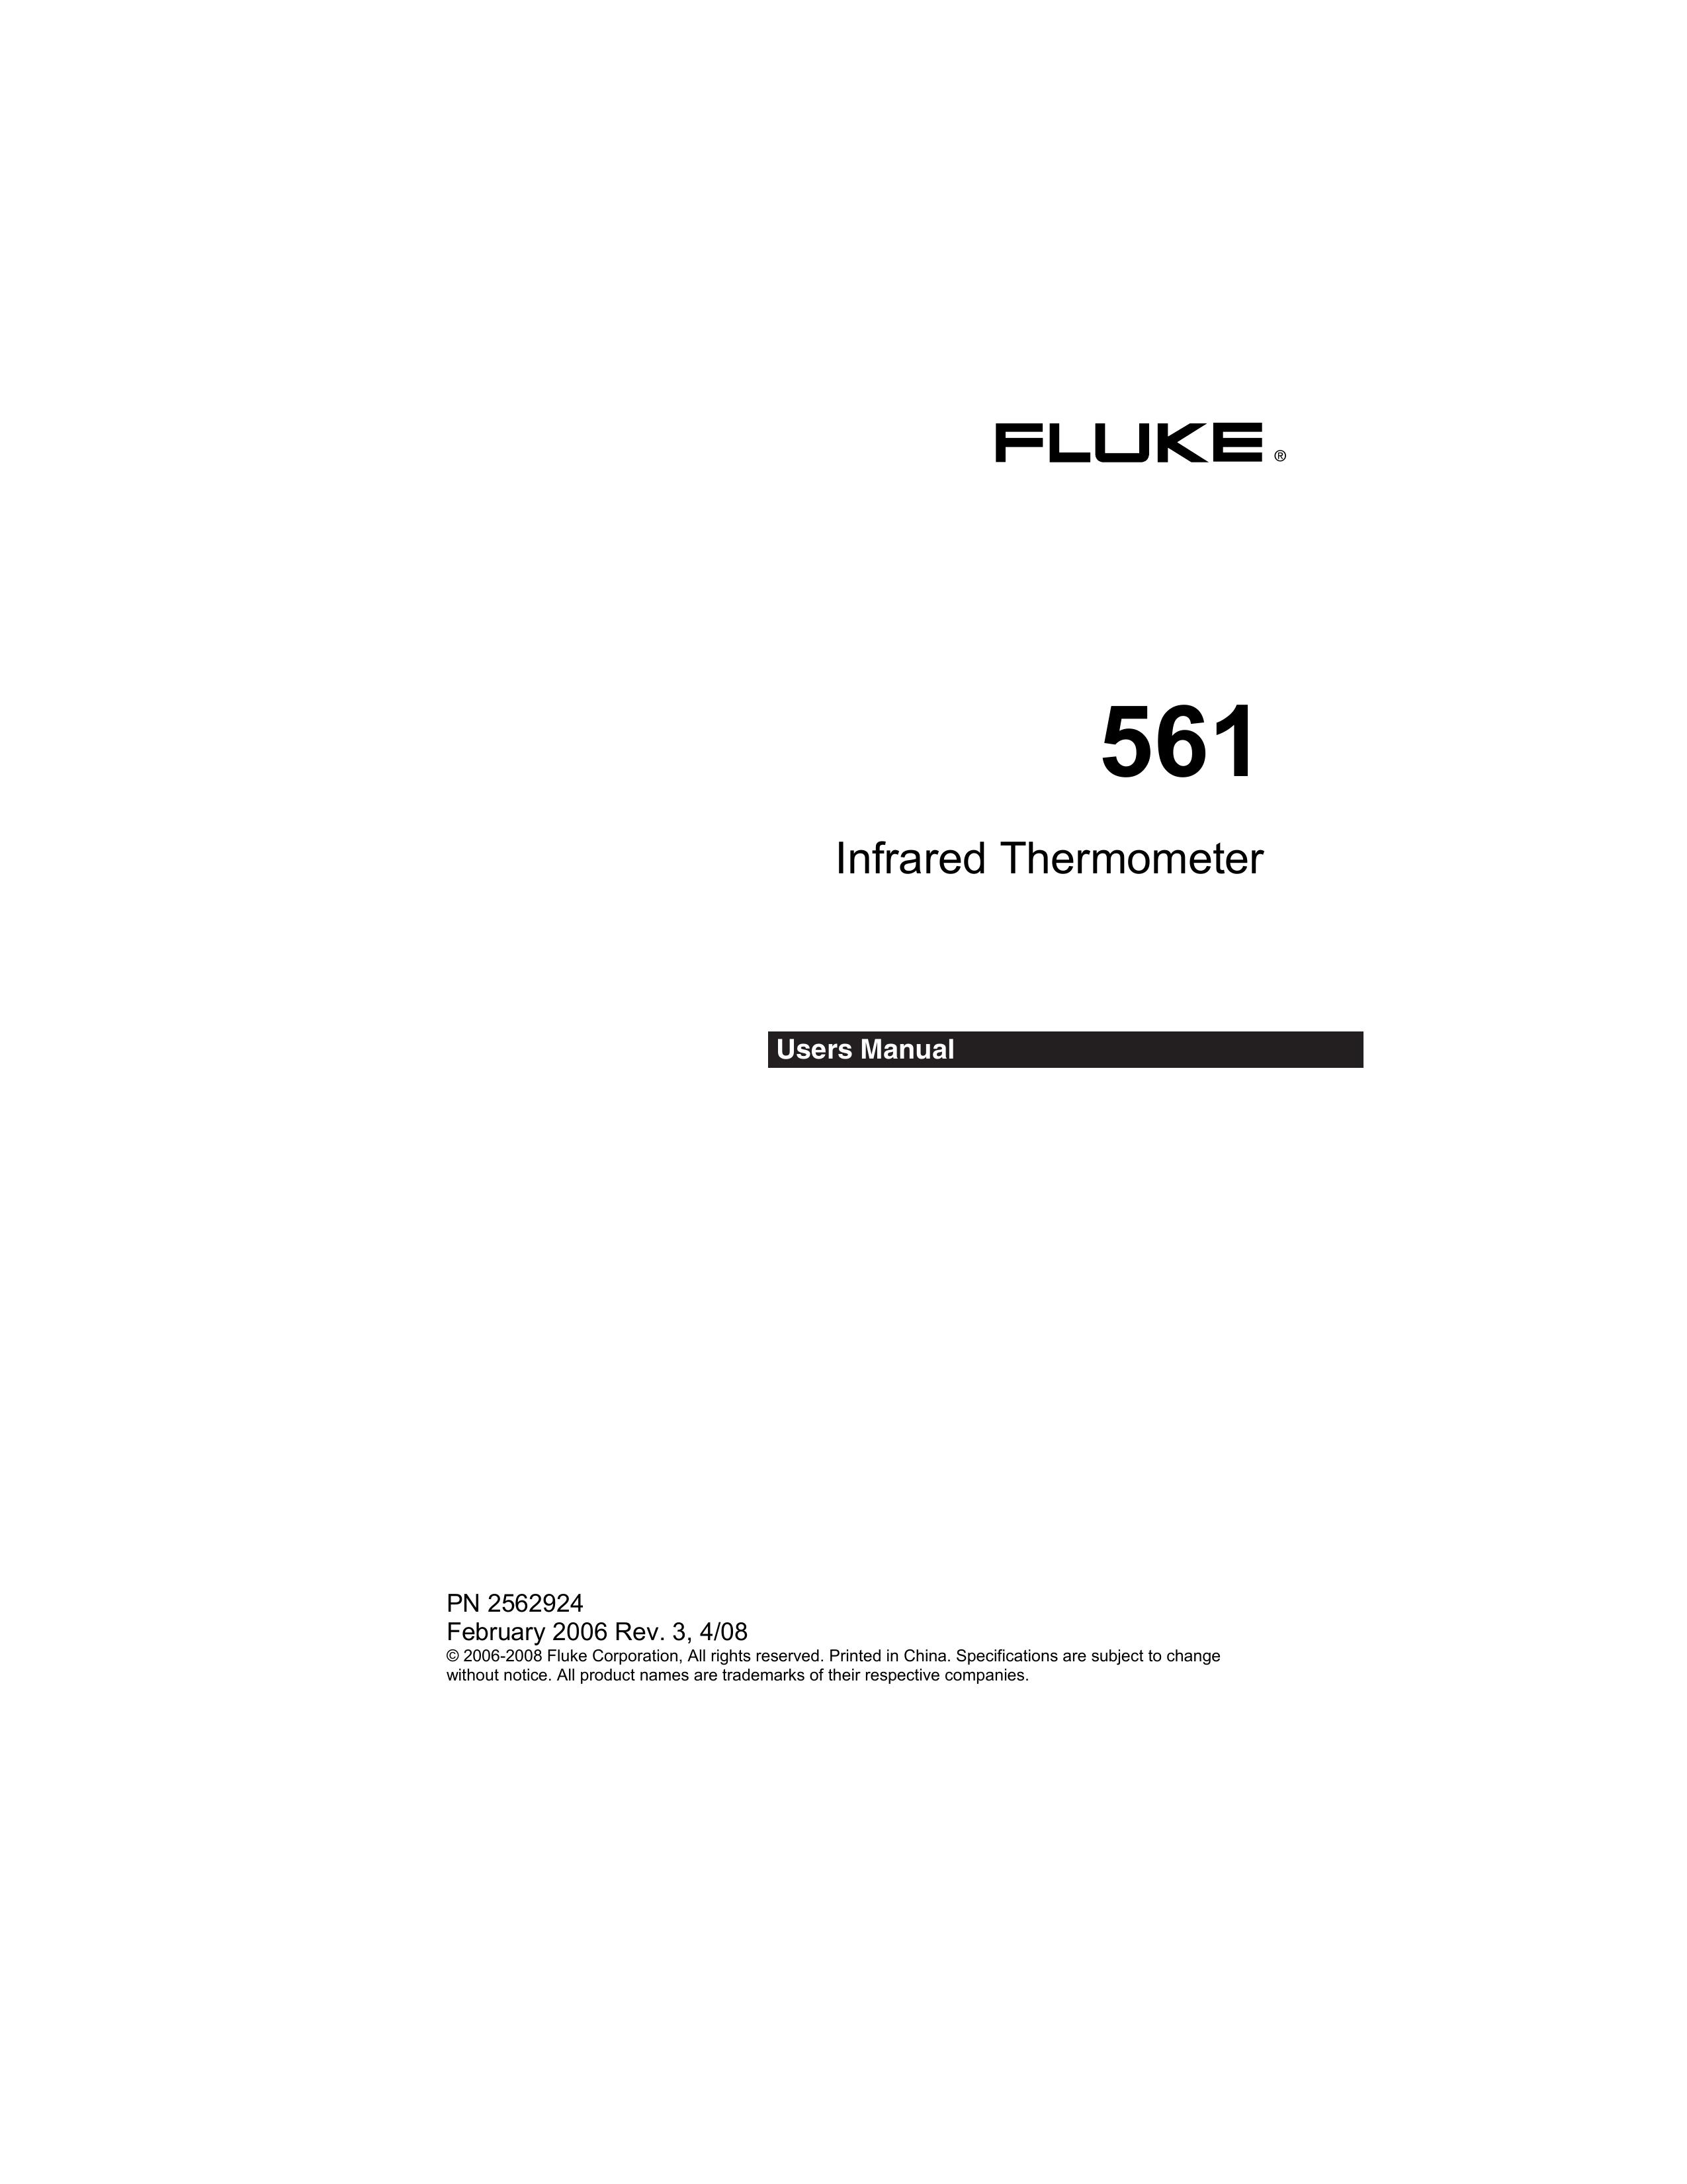 Fluke 561s Thermometer User Manual